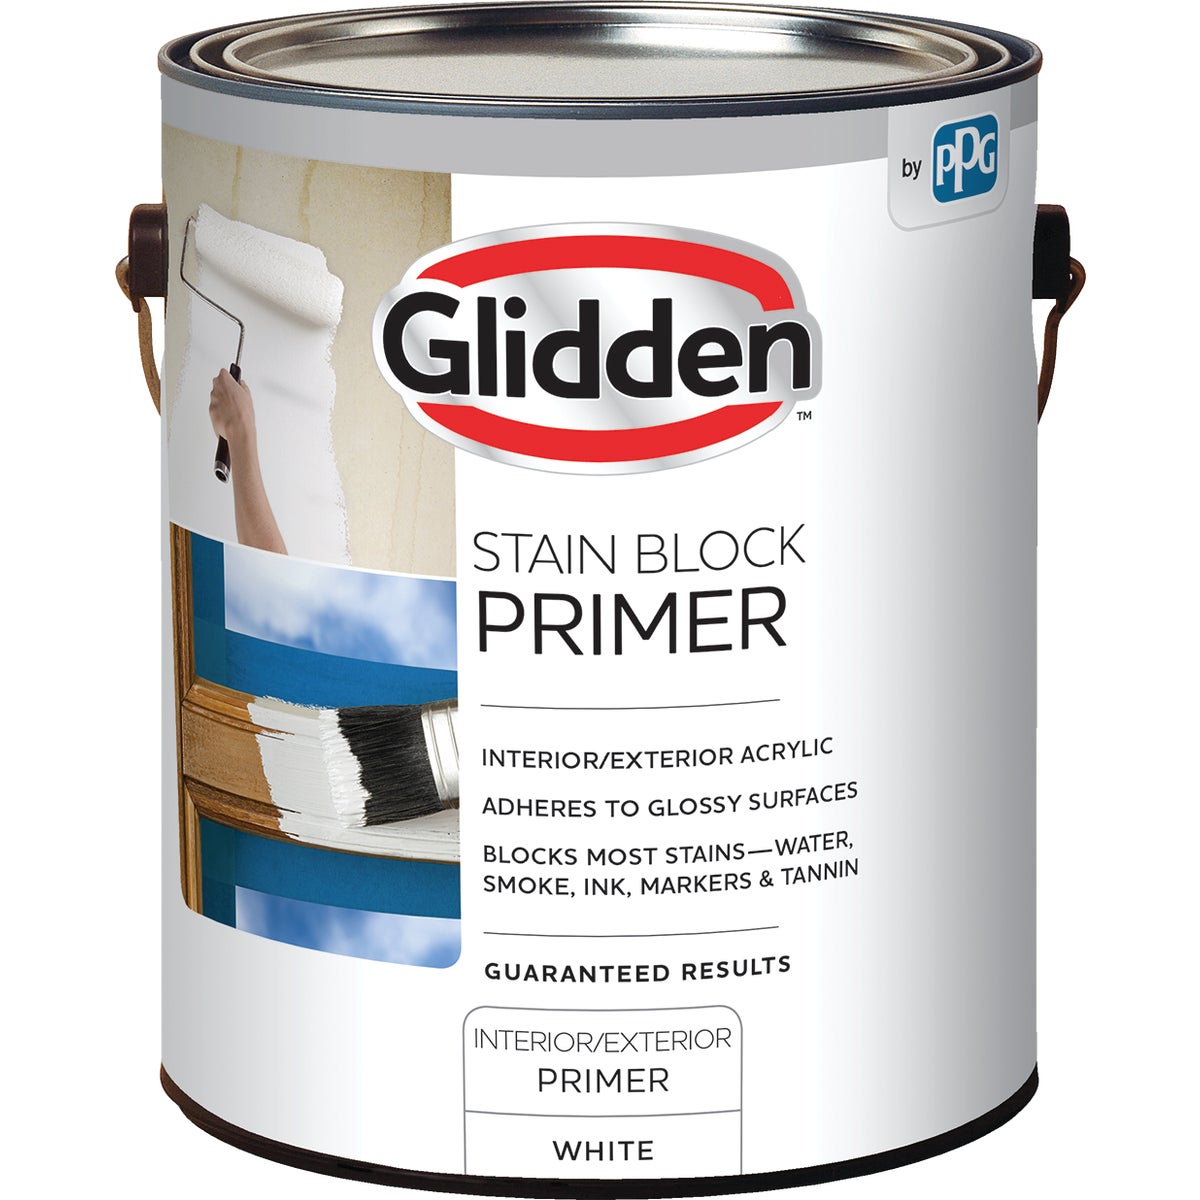 Glidden Stain Block Primer; Interior/Exterior Primer 1 Gallon